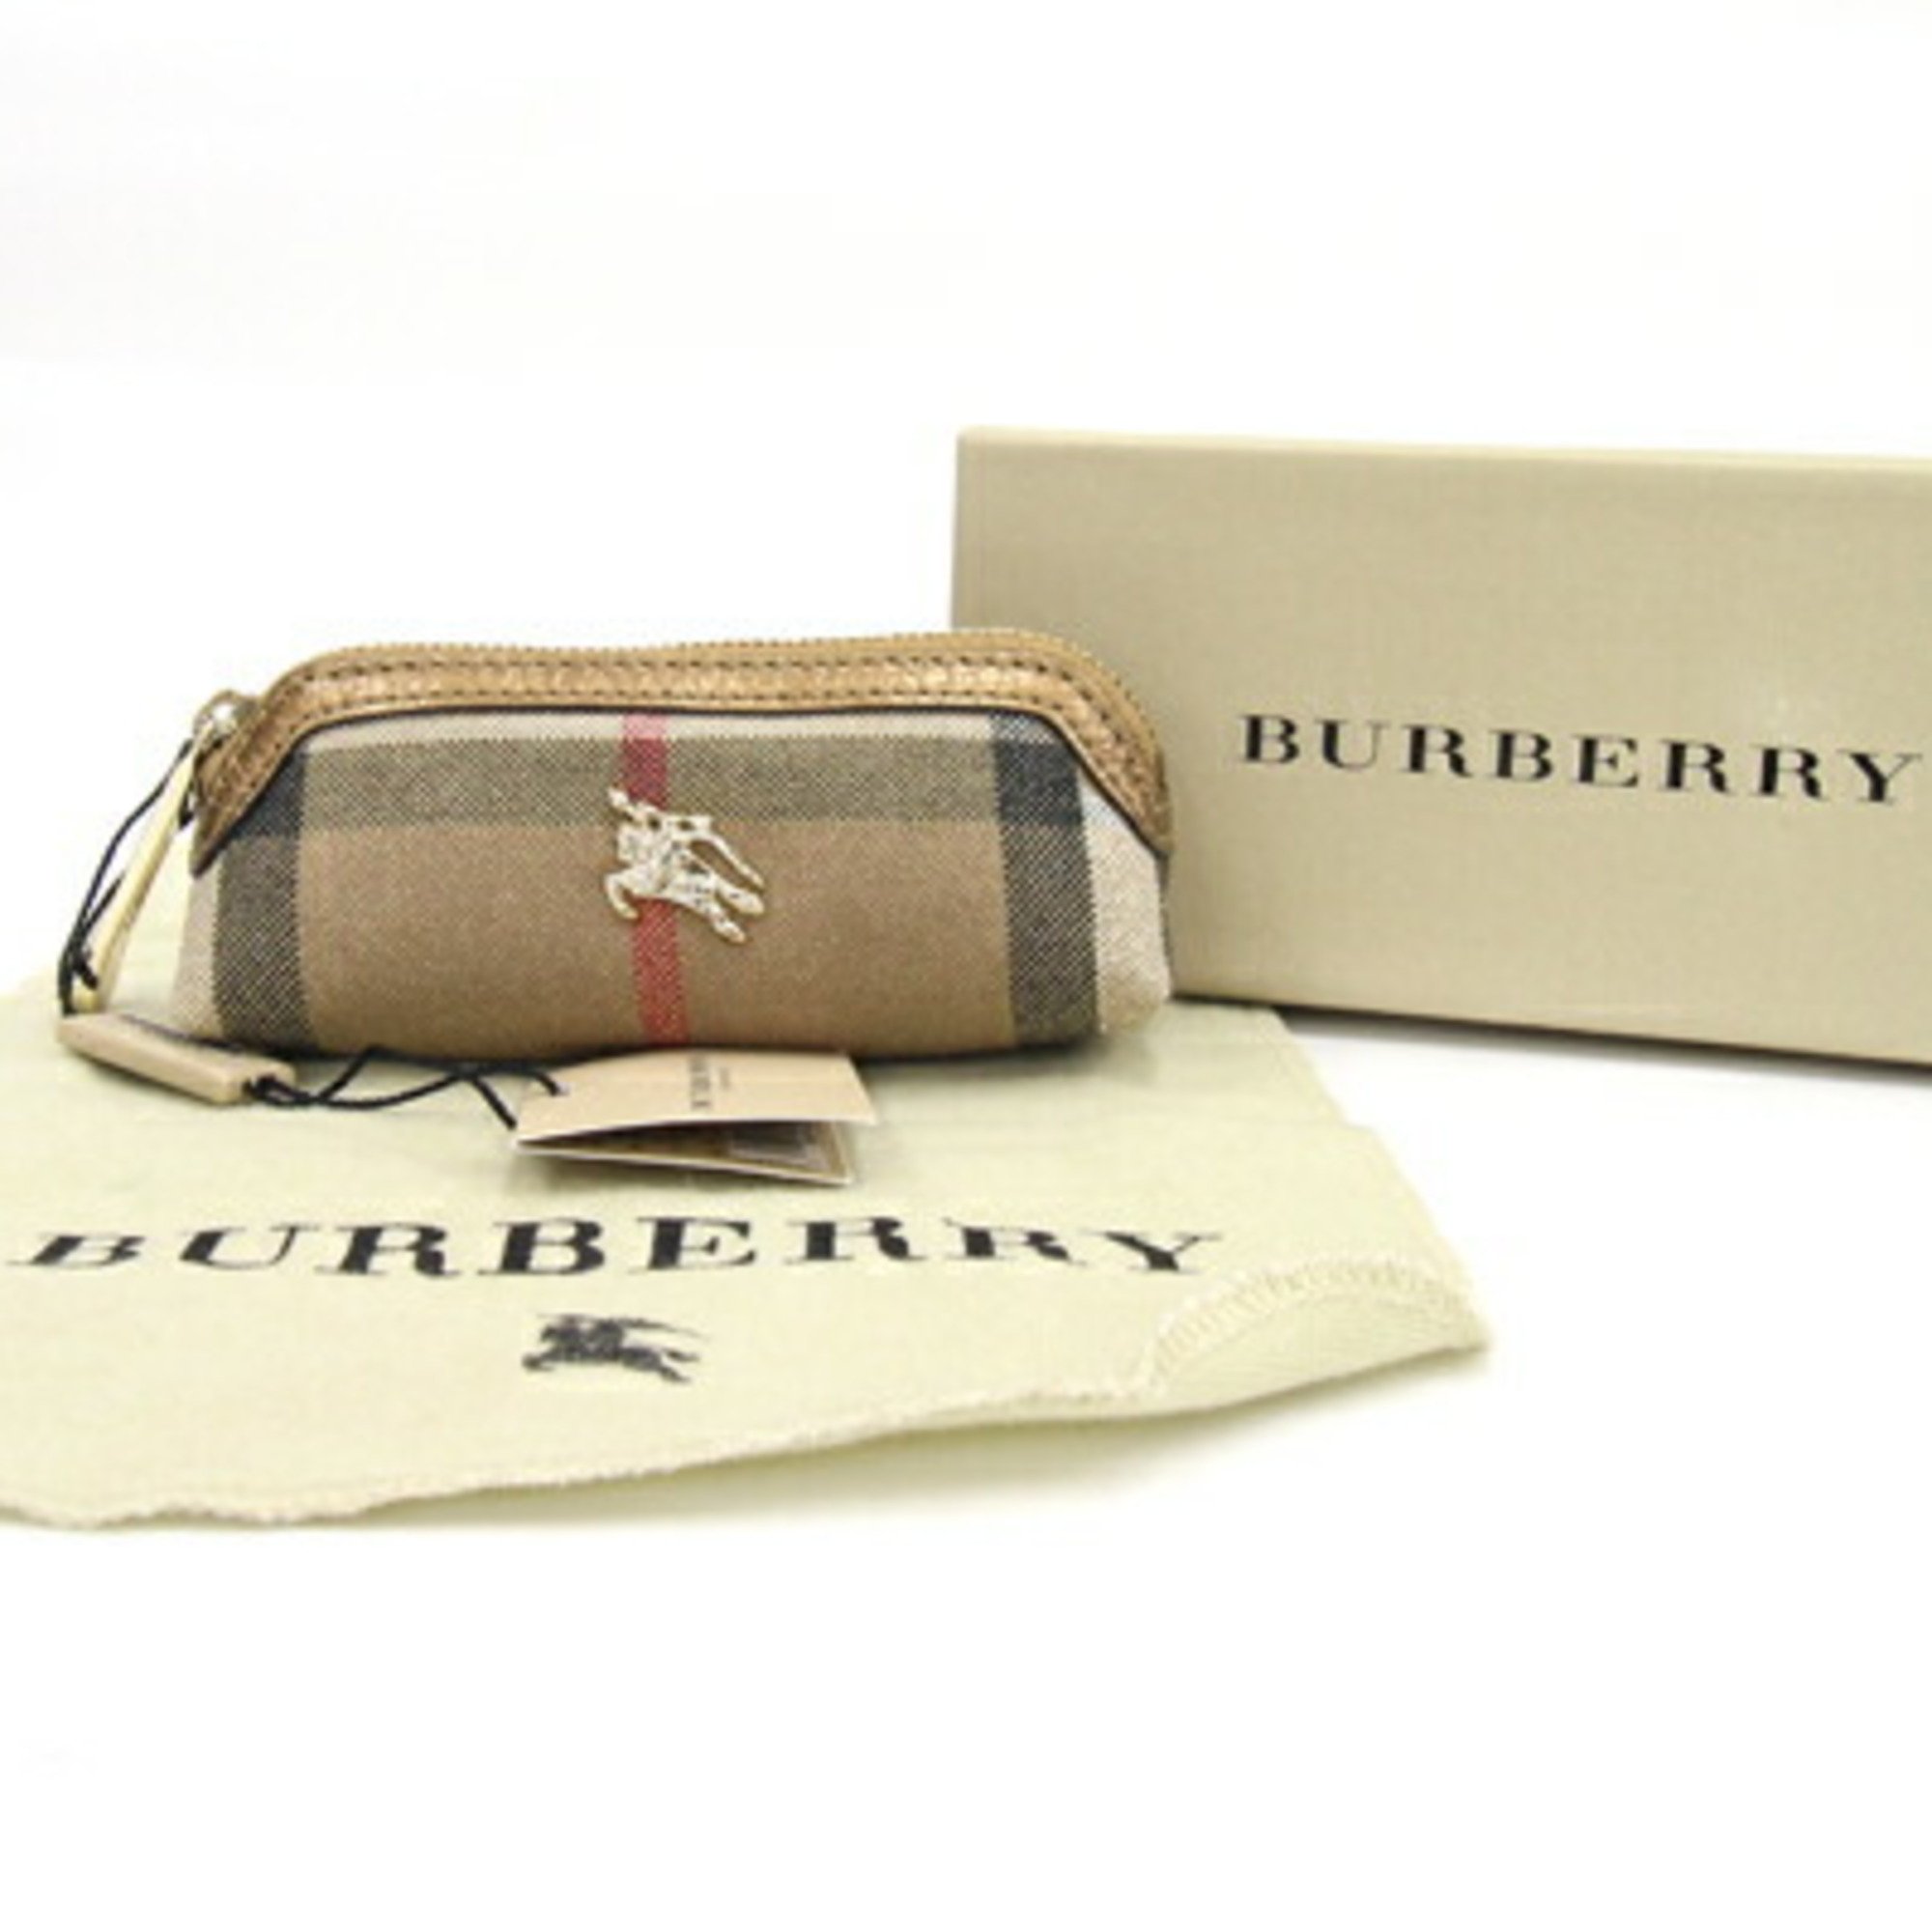 Burberry Pouch Beige Canvas Leather Check Pattern Key Case Men Women BURBERRY